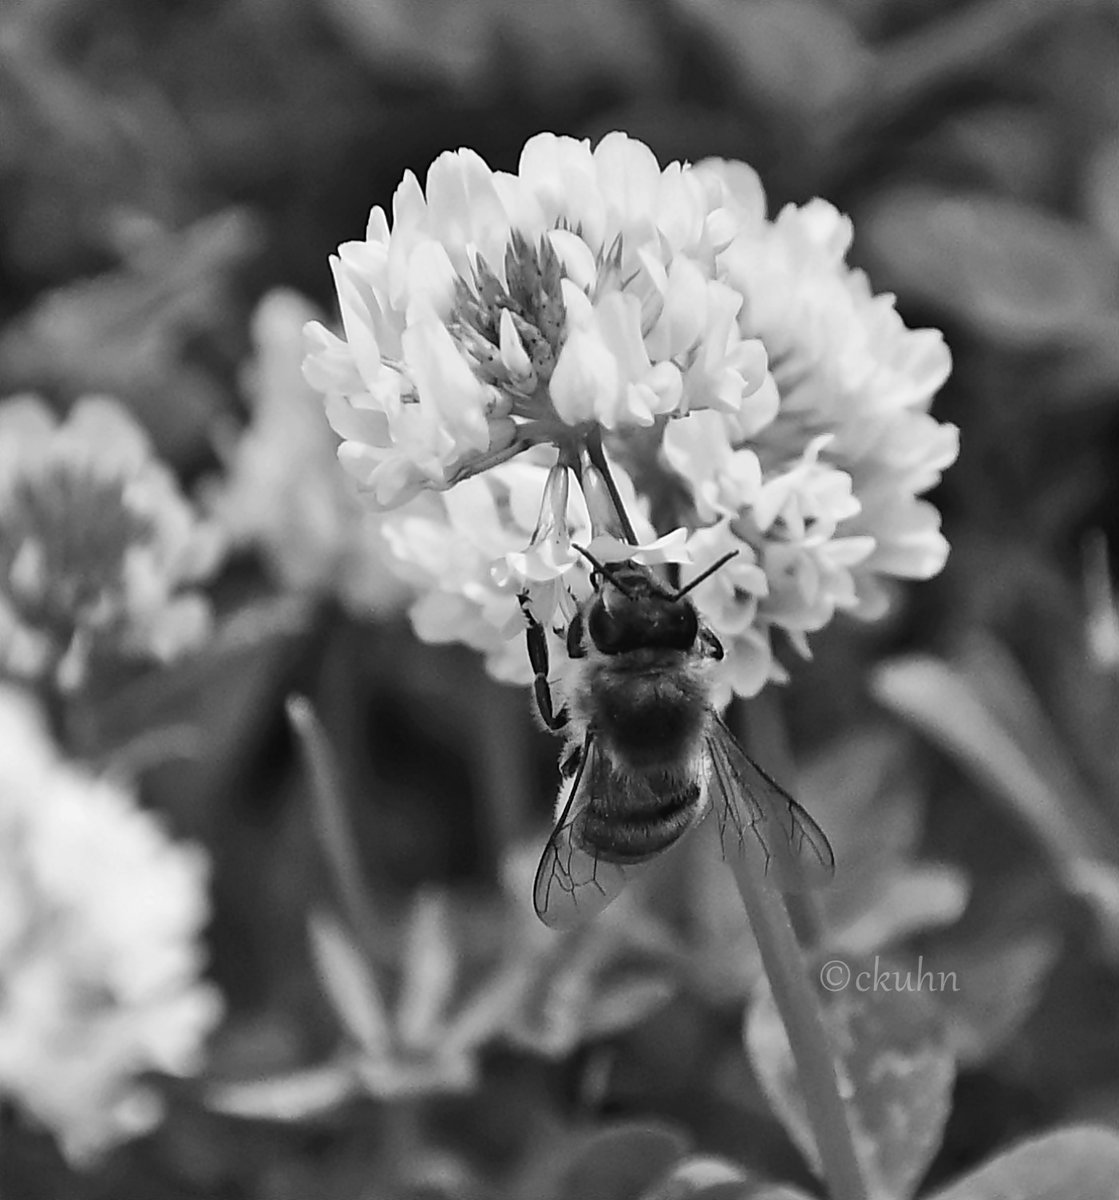 Buzzing by for #bnw_macro. 🐝🍀🖤@BNW_Macro #SundayVibes #Bees #BeeKind #SavetheBees #Pollinators #Clover #blackandwhitephotography